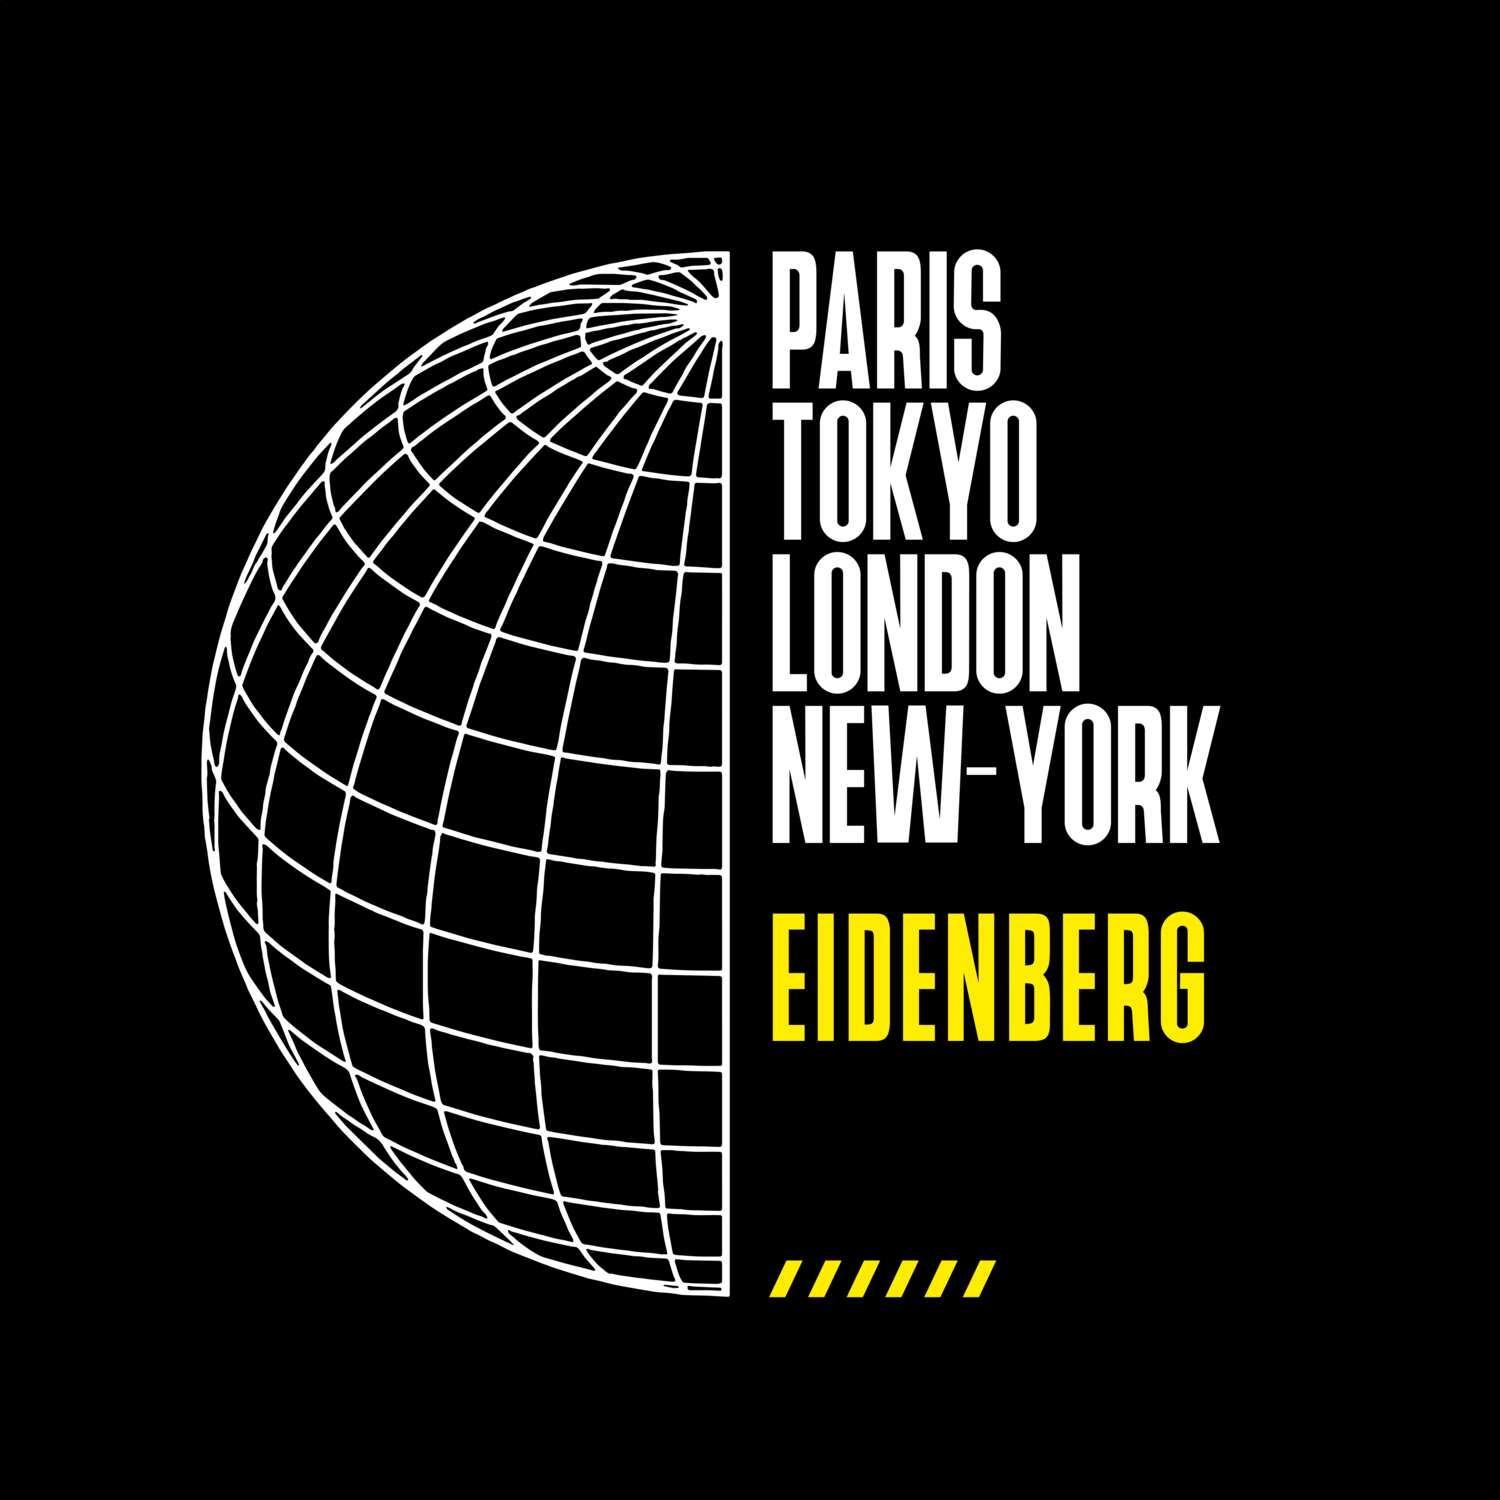 Eidenberg T-Shirt »Paris Tokyo London«